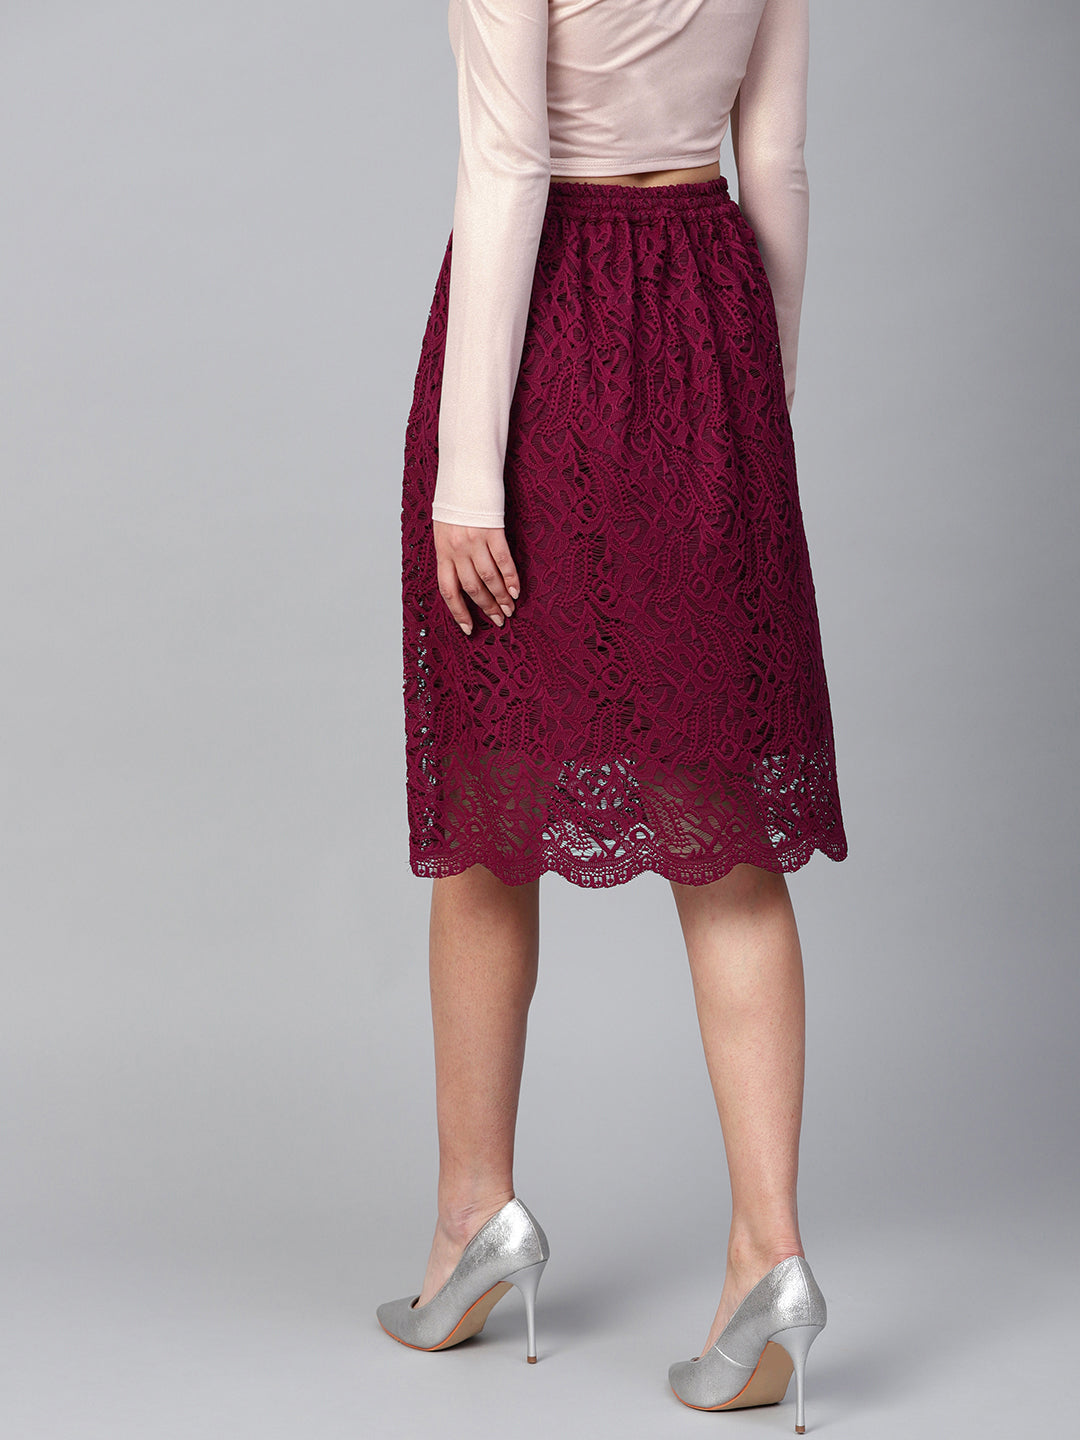 Athena Burgundy Lace A-Line Skirt - Athena Lifestyle